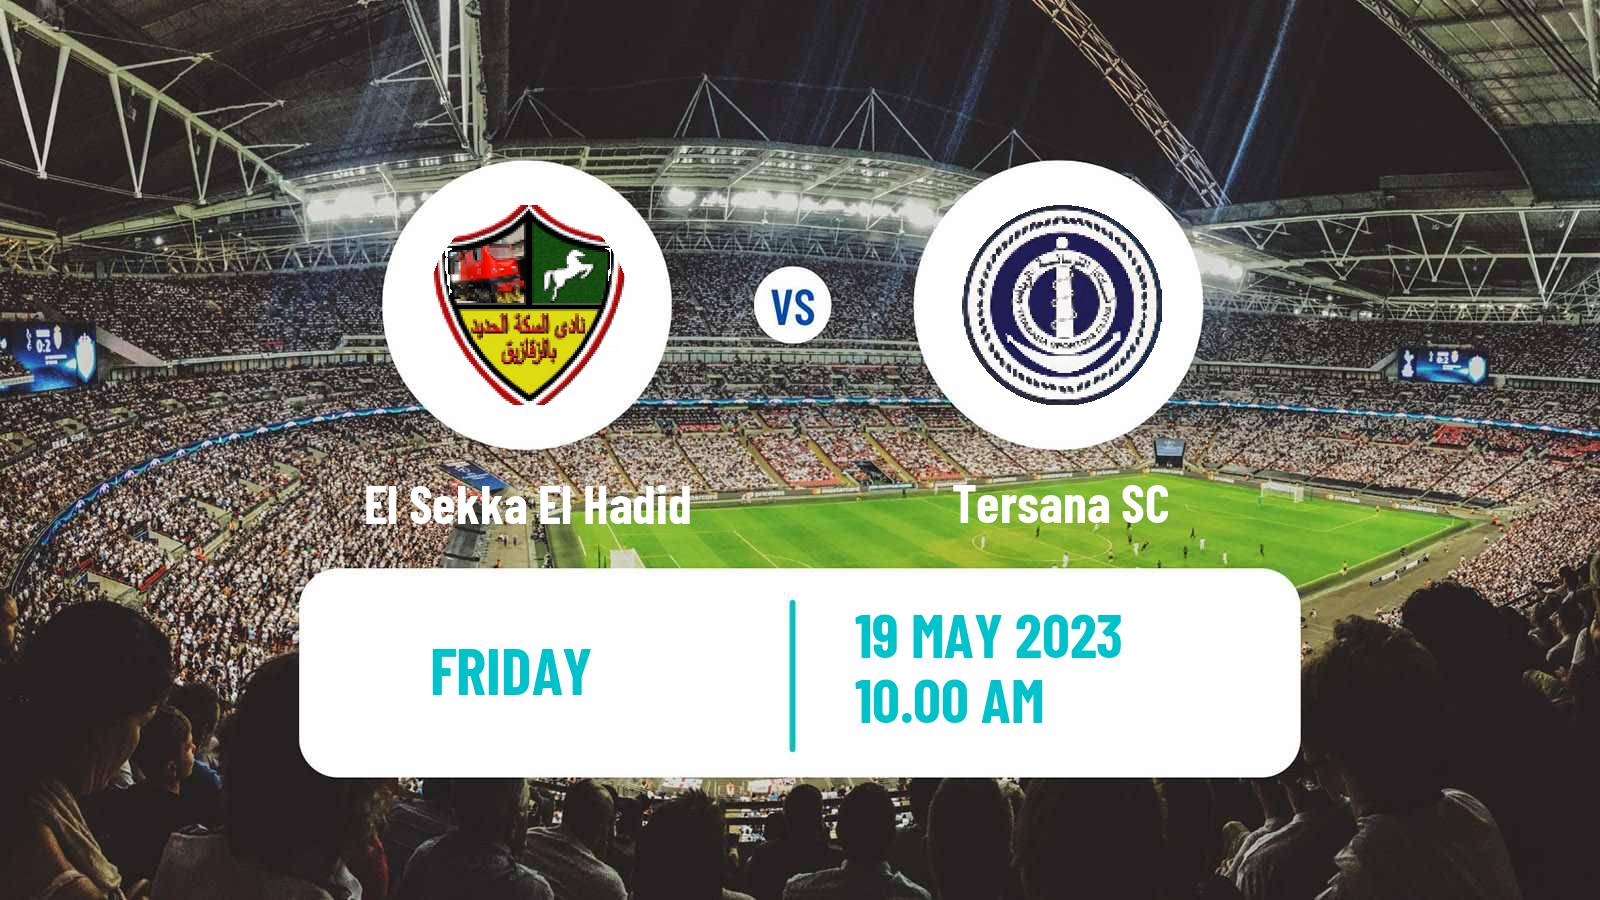 Soccer Egyptian Division 2 - Group B El Sekka El Hadid - Tersana